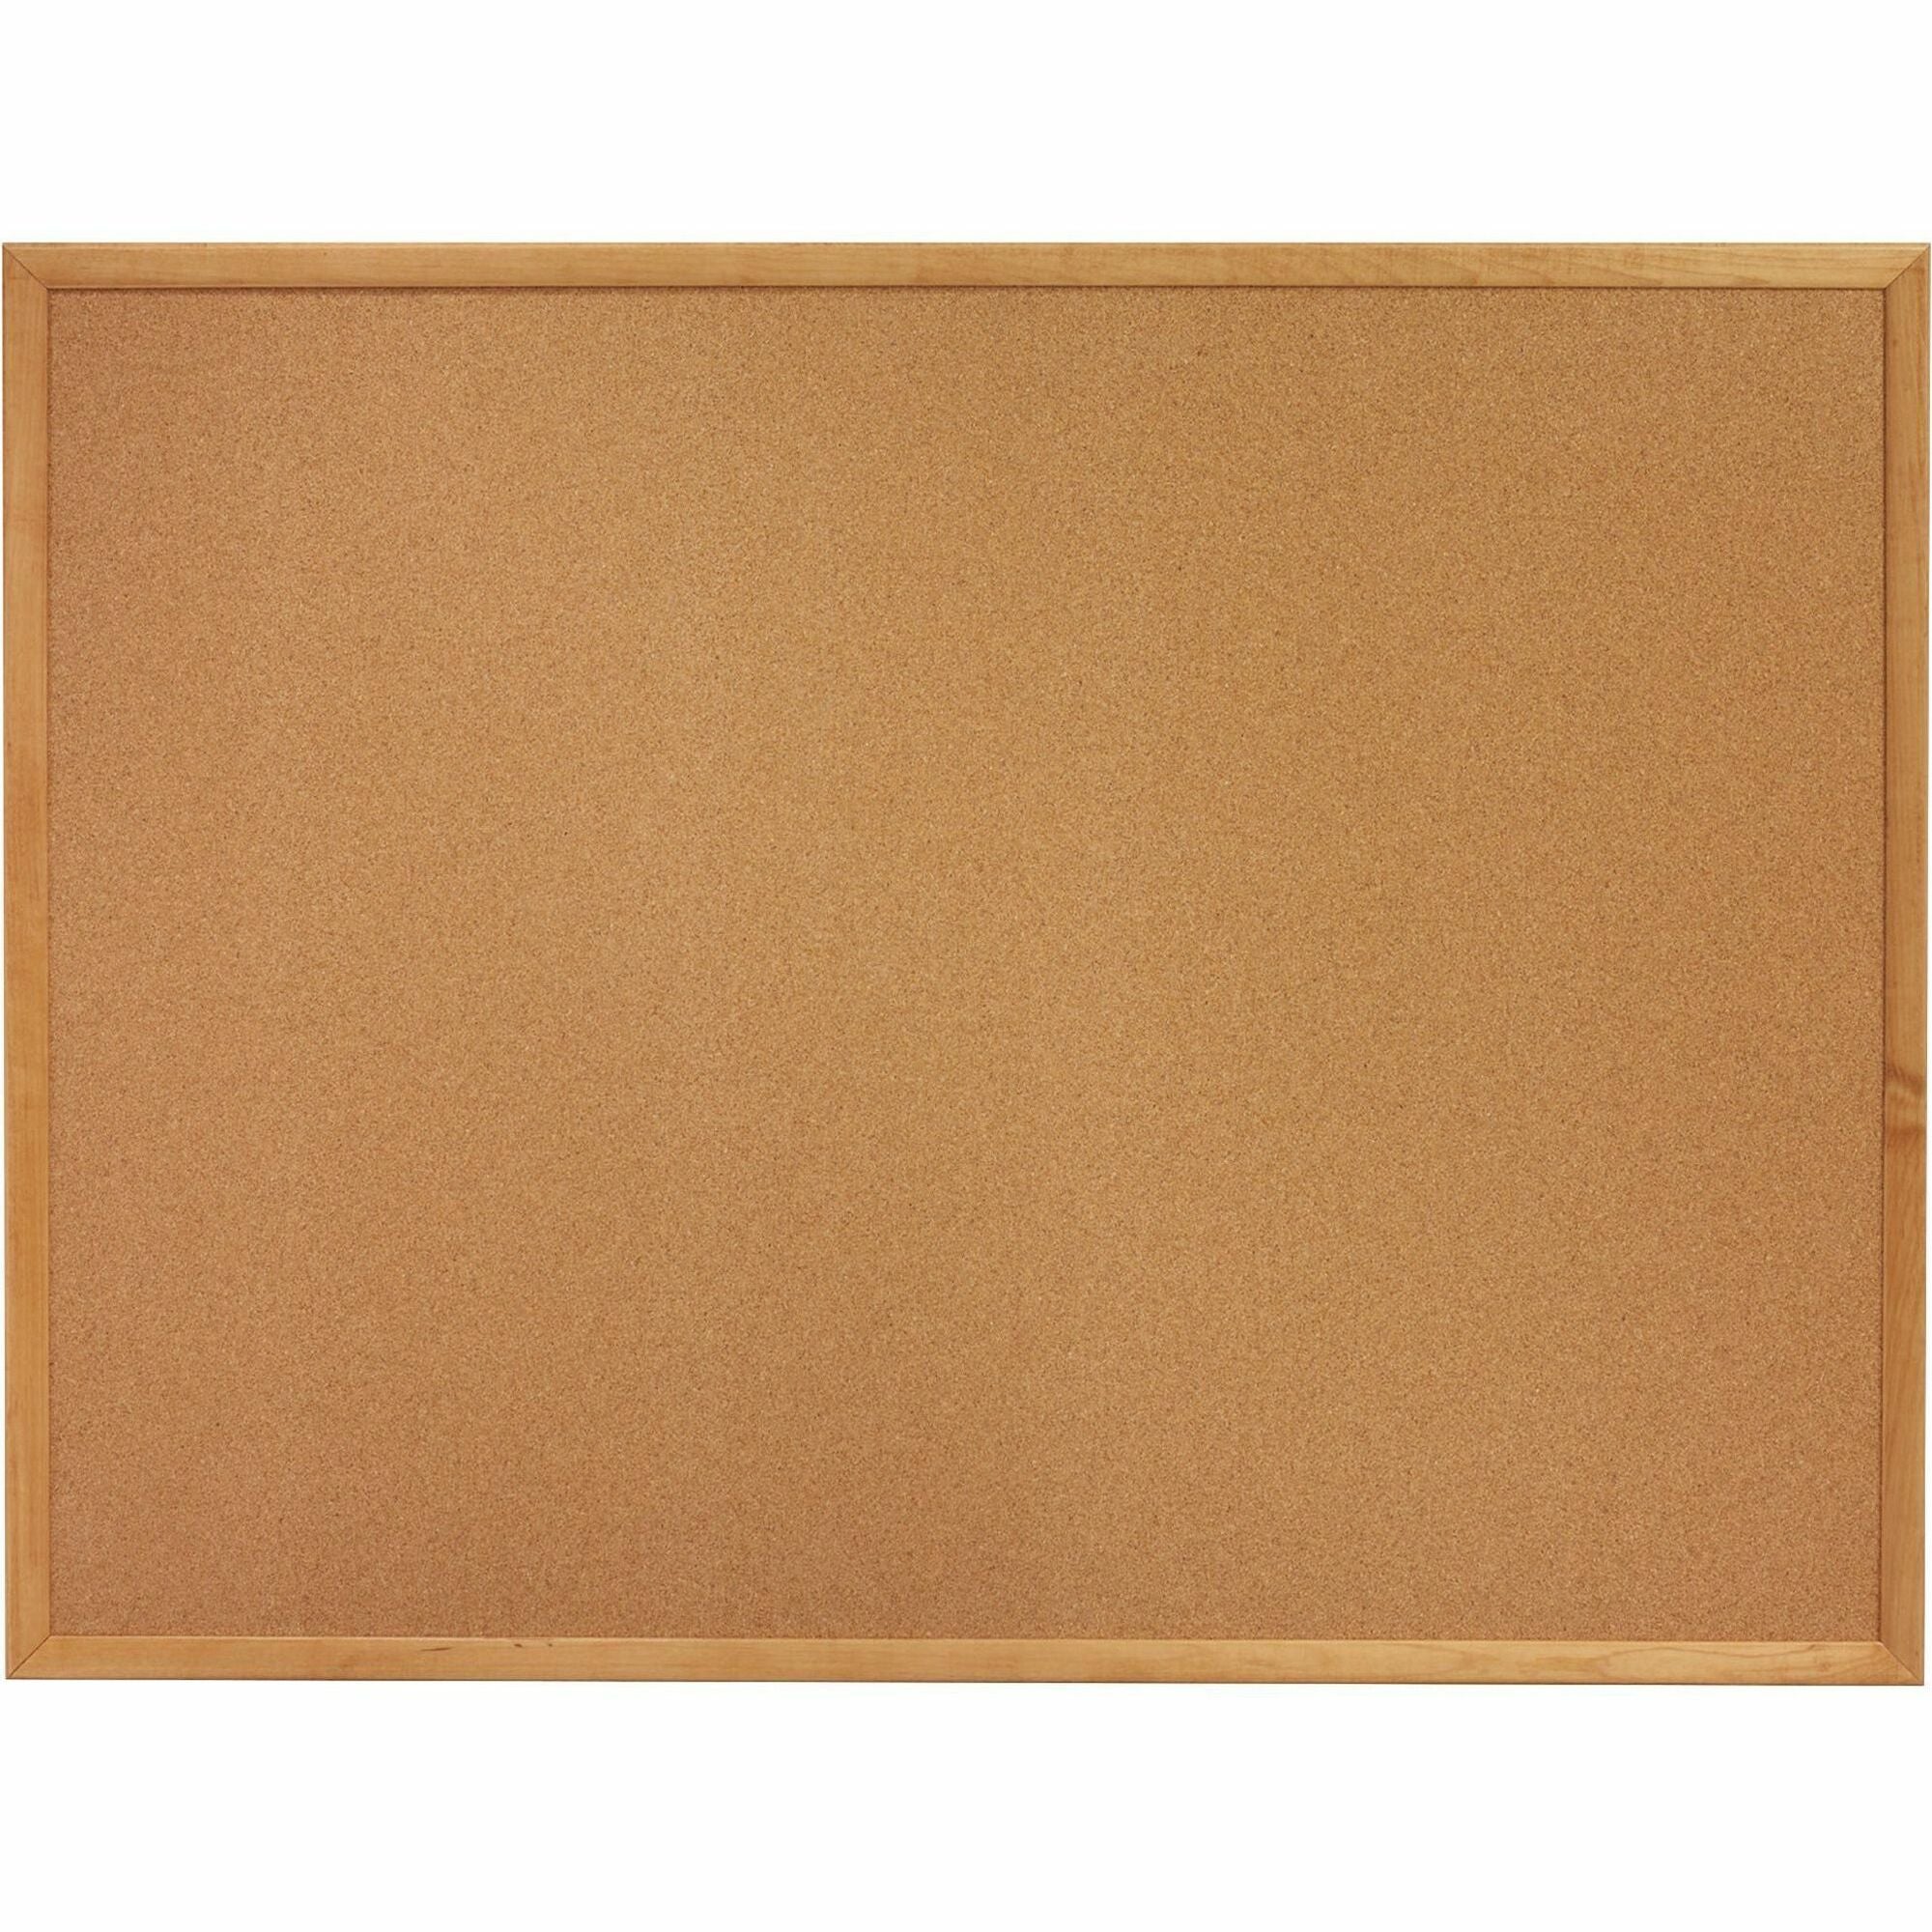 lorell-bulletin-board-36-height-x-48-width-cork-surface-long-lasting-warp-resistant-brown-oak-frame-1-each_llr19768 - 1